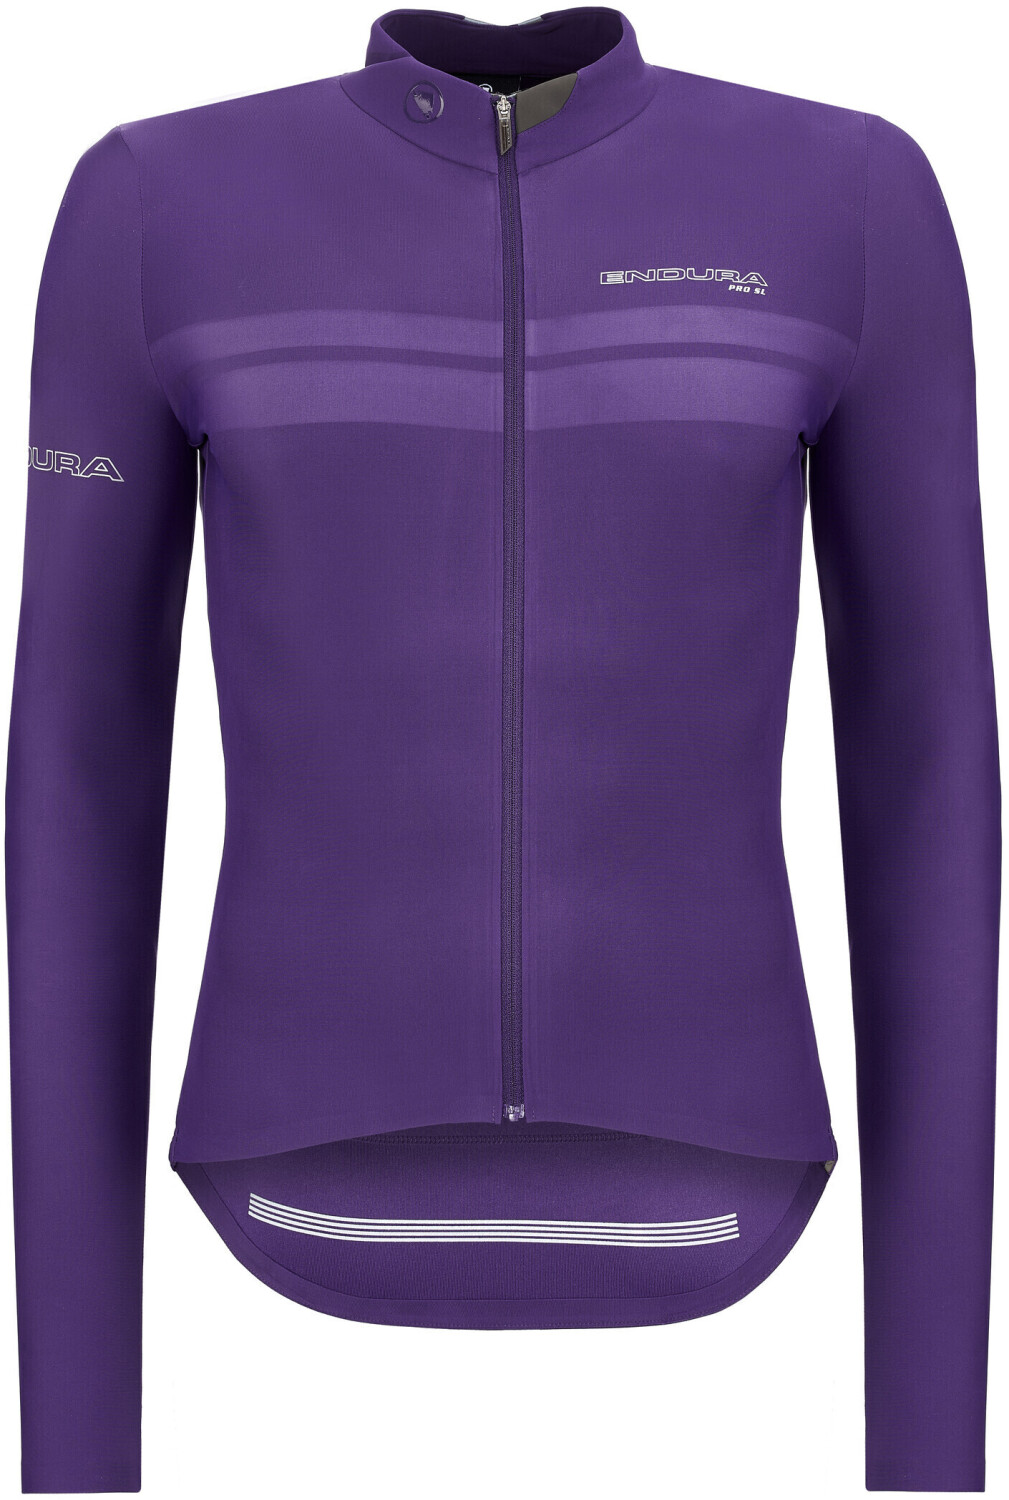 Photos - Cycling Clothing Endura Pro SL II Long Sleeve Jersey grape 